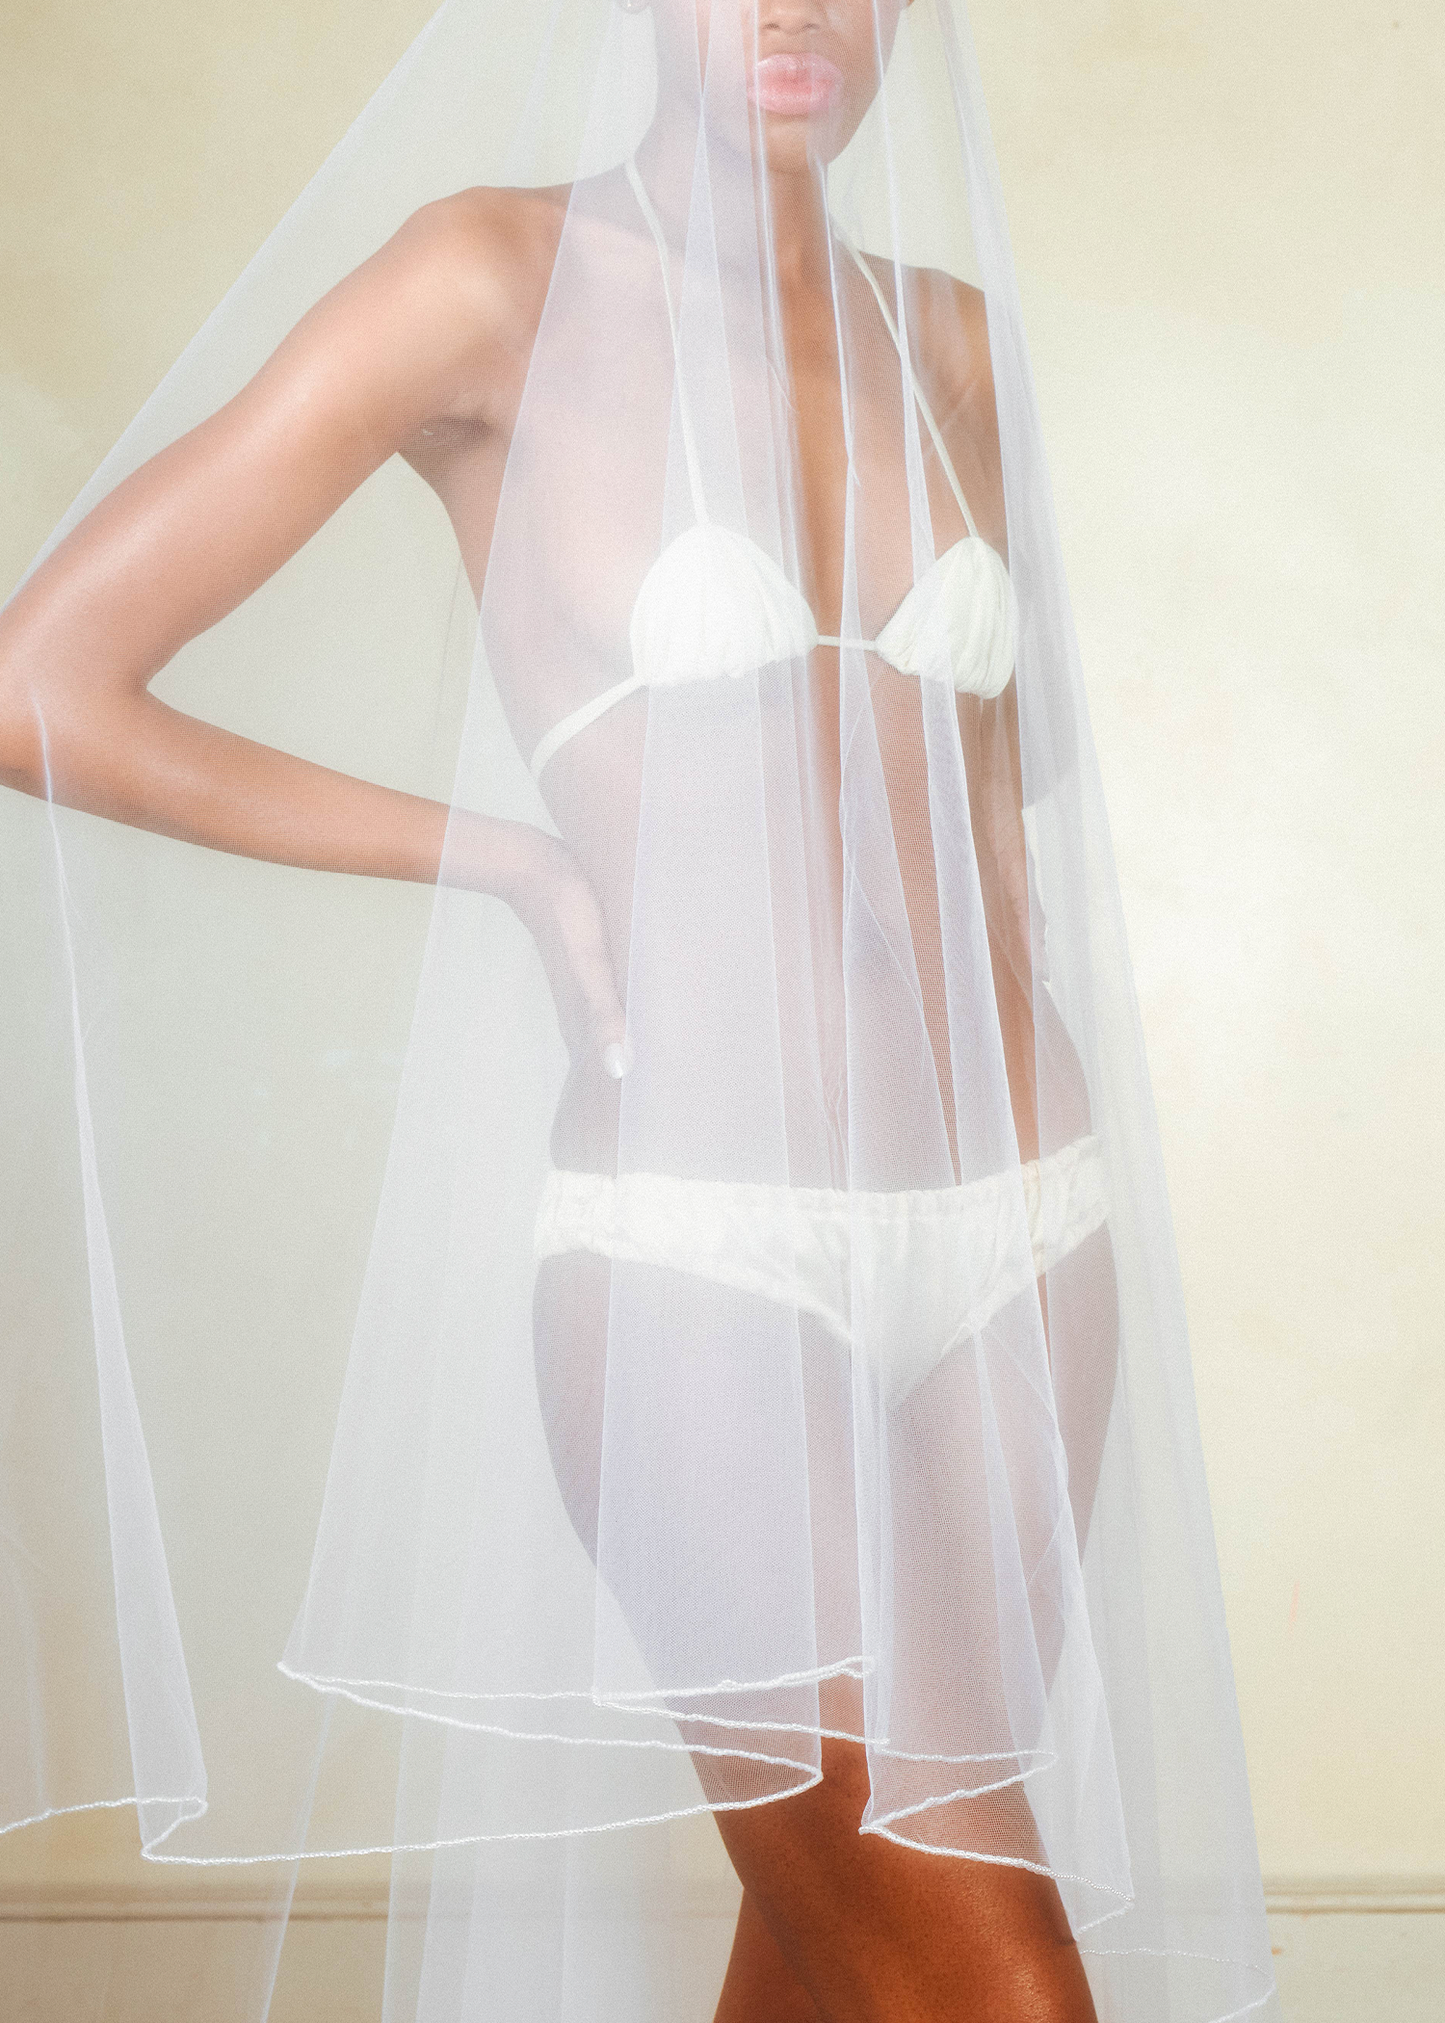 Shirley Bridal Bikini in Ivory Silk Charmeuse